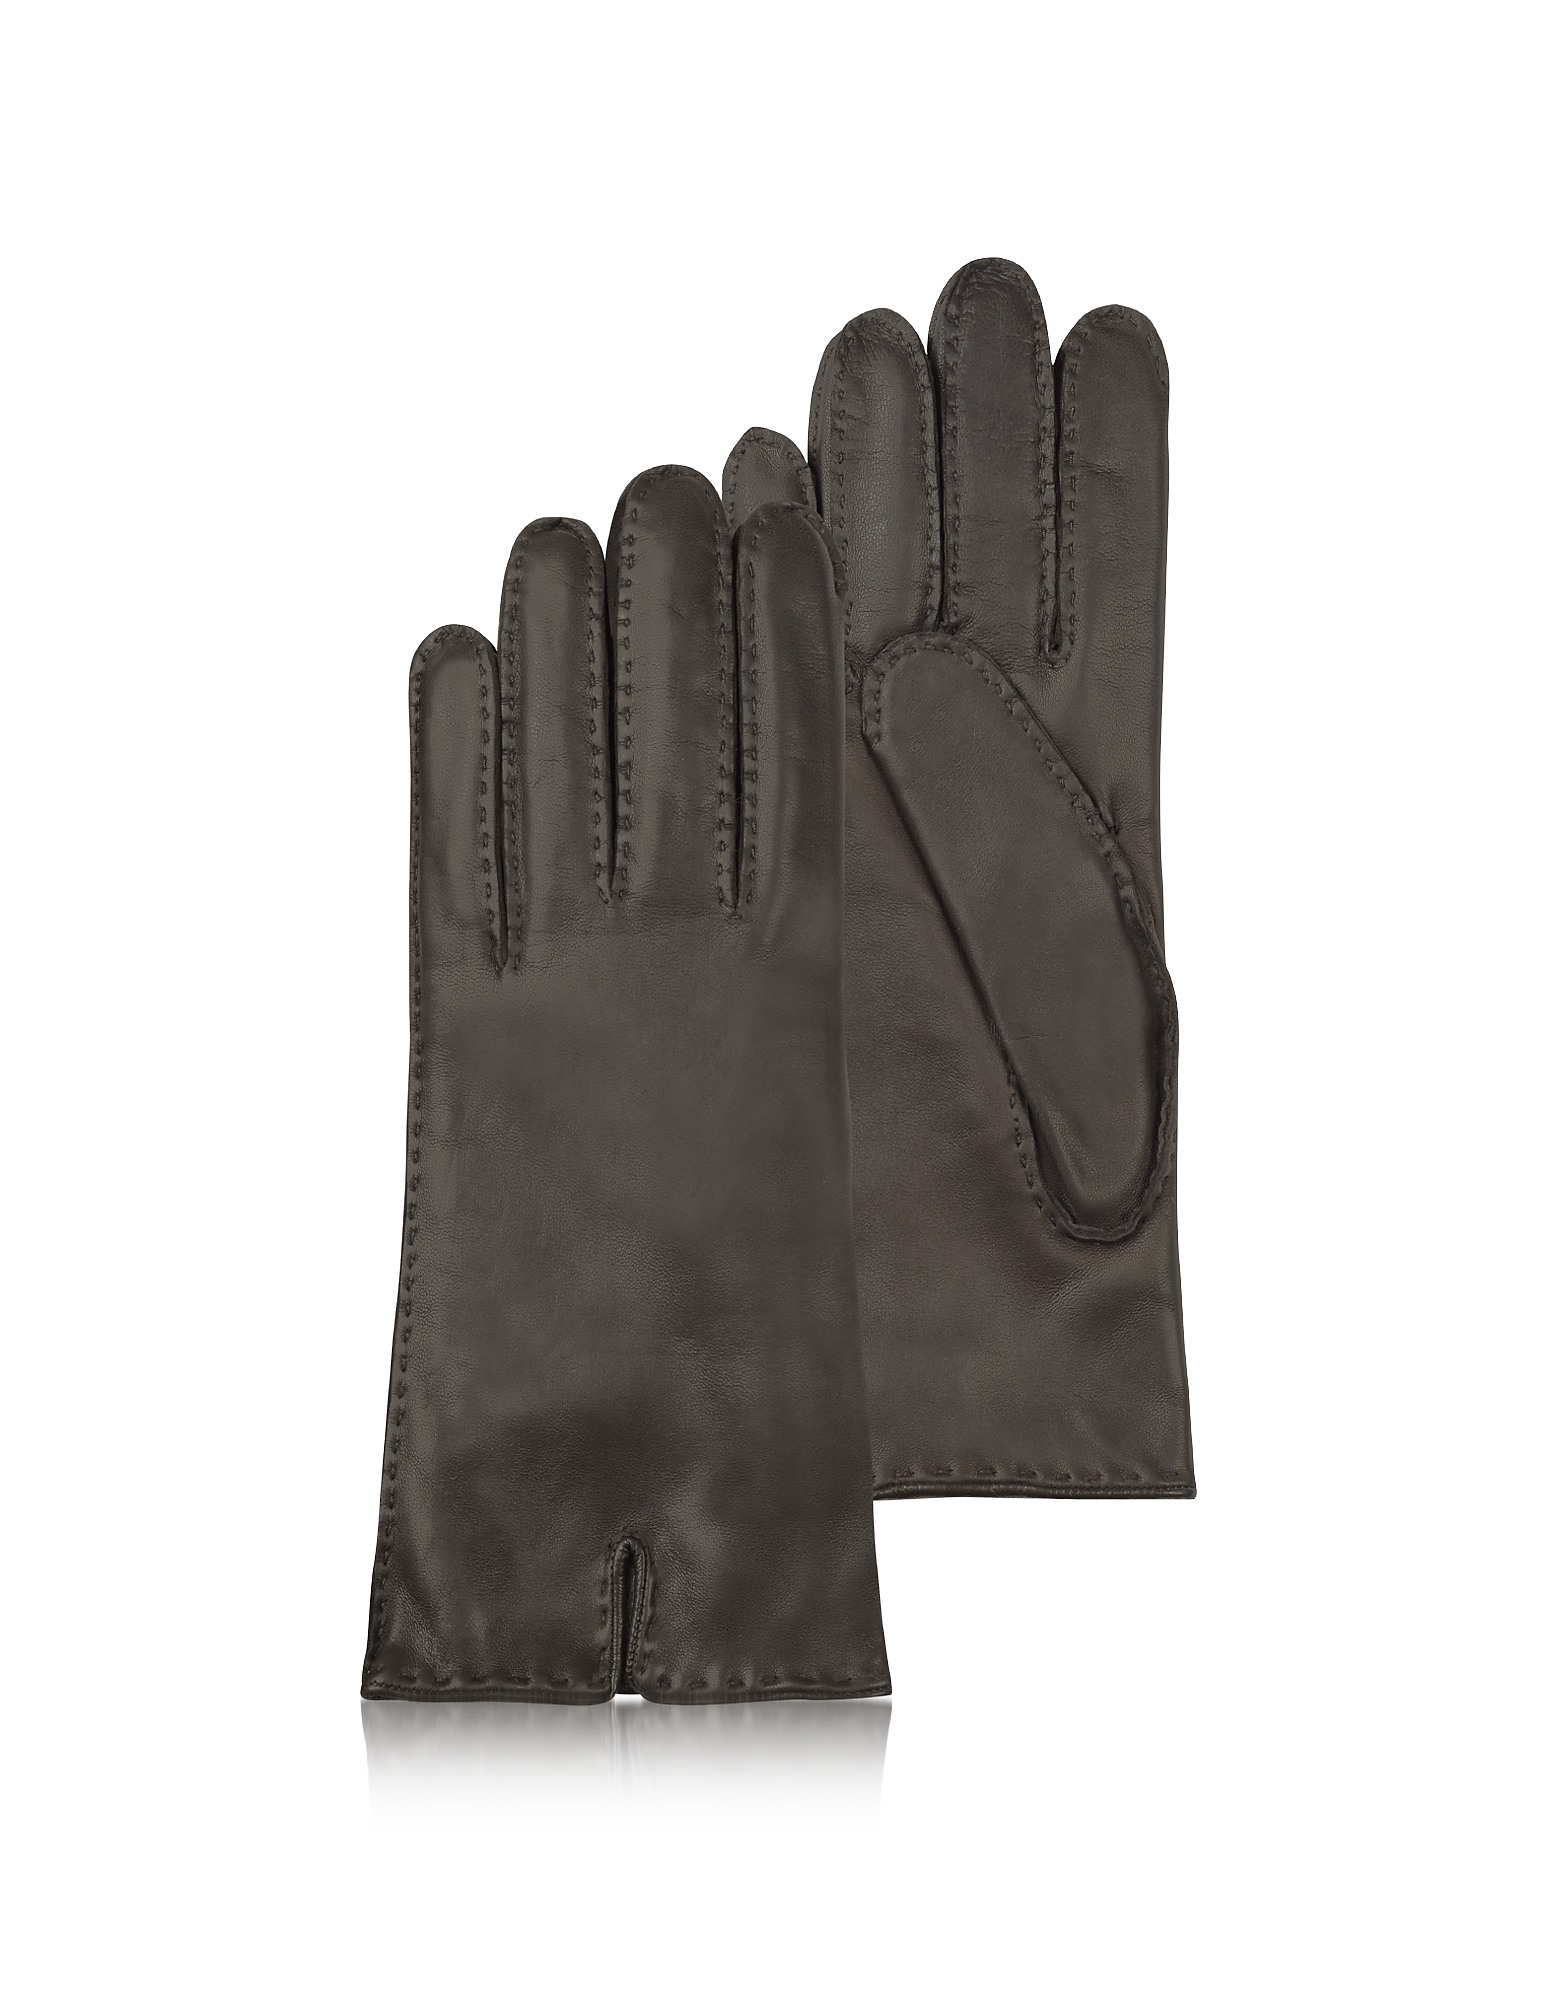 Forzieri Women's Gloves Women's Cashmere Lined Dark Brown Italian Leather Gloves